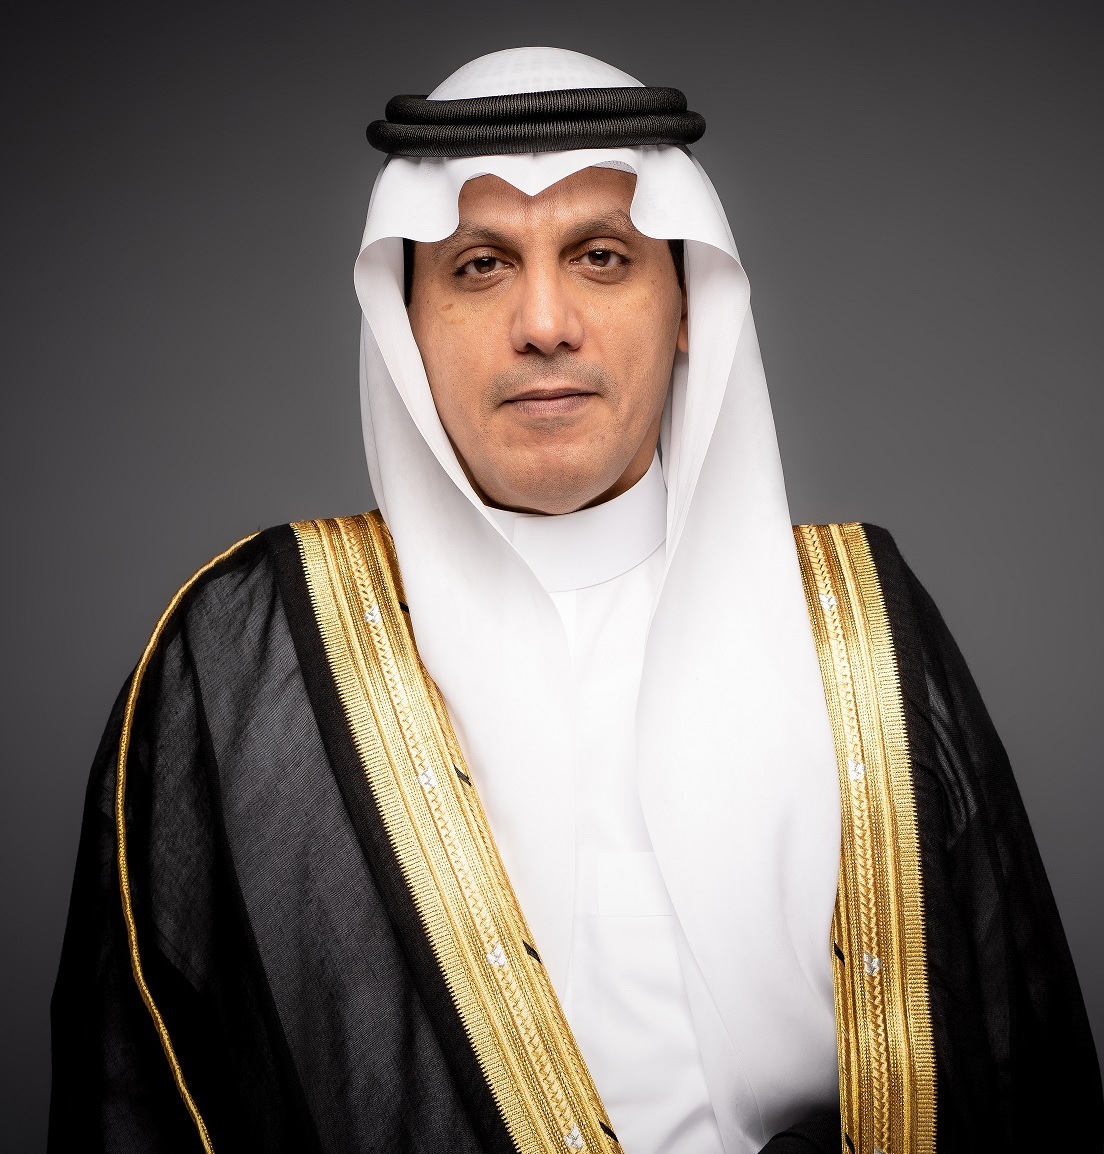 Prof. Abdulrahman Al-Talhi